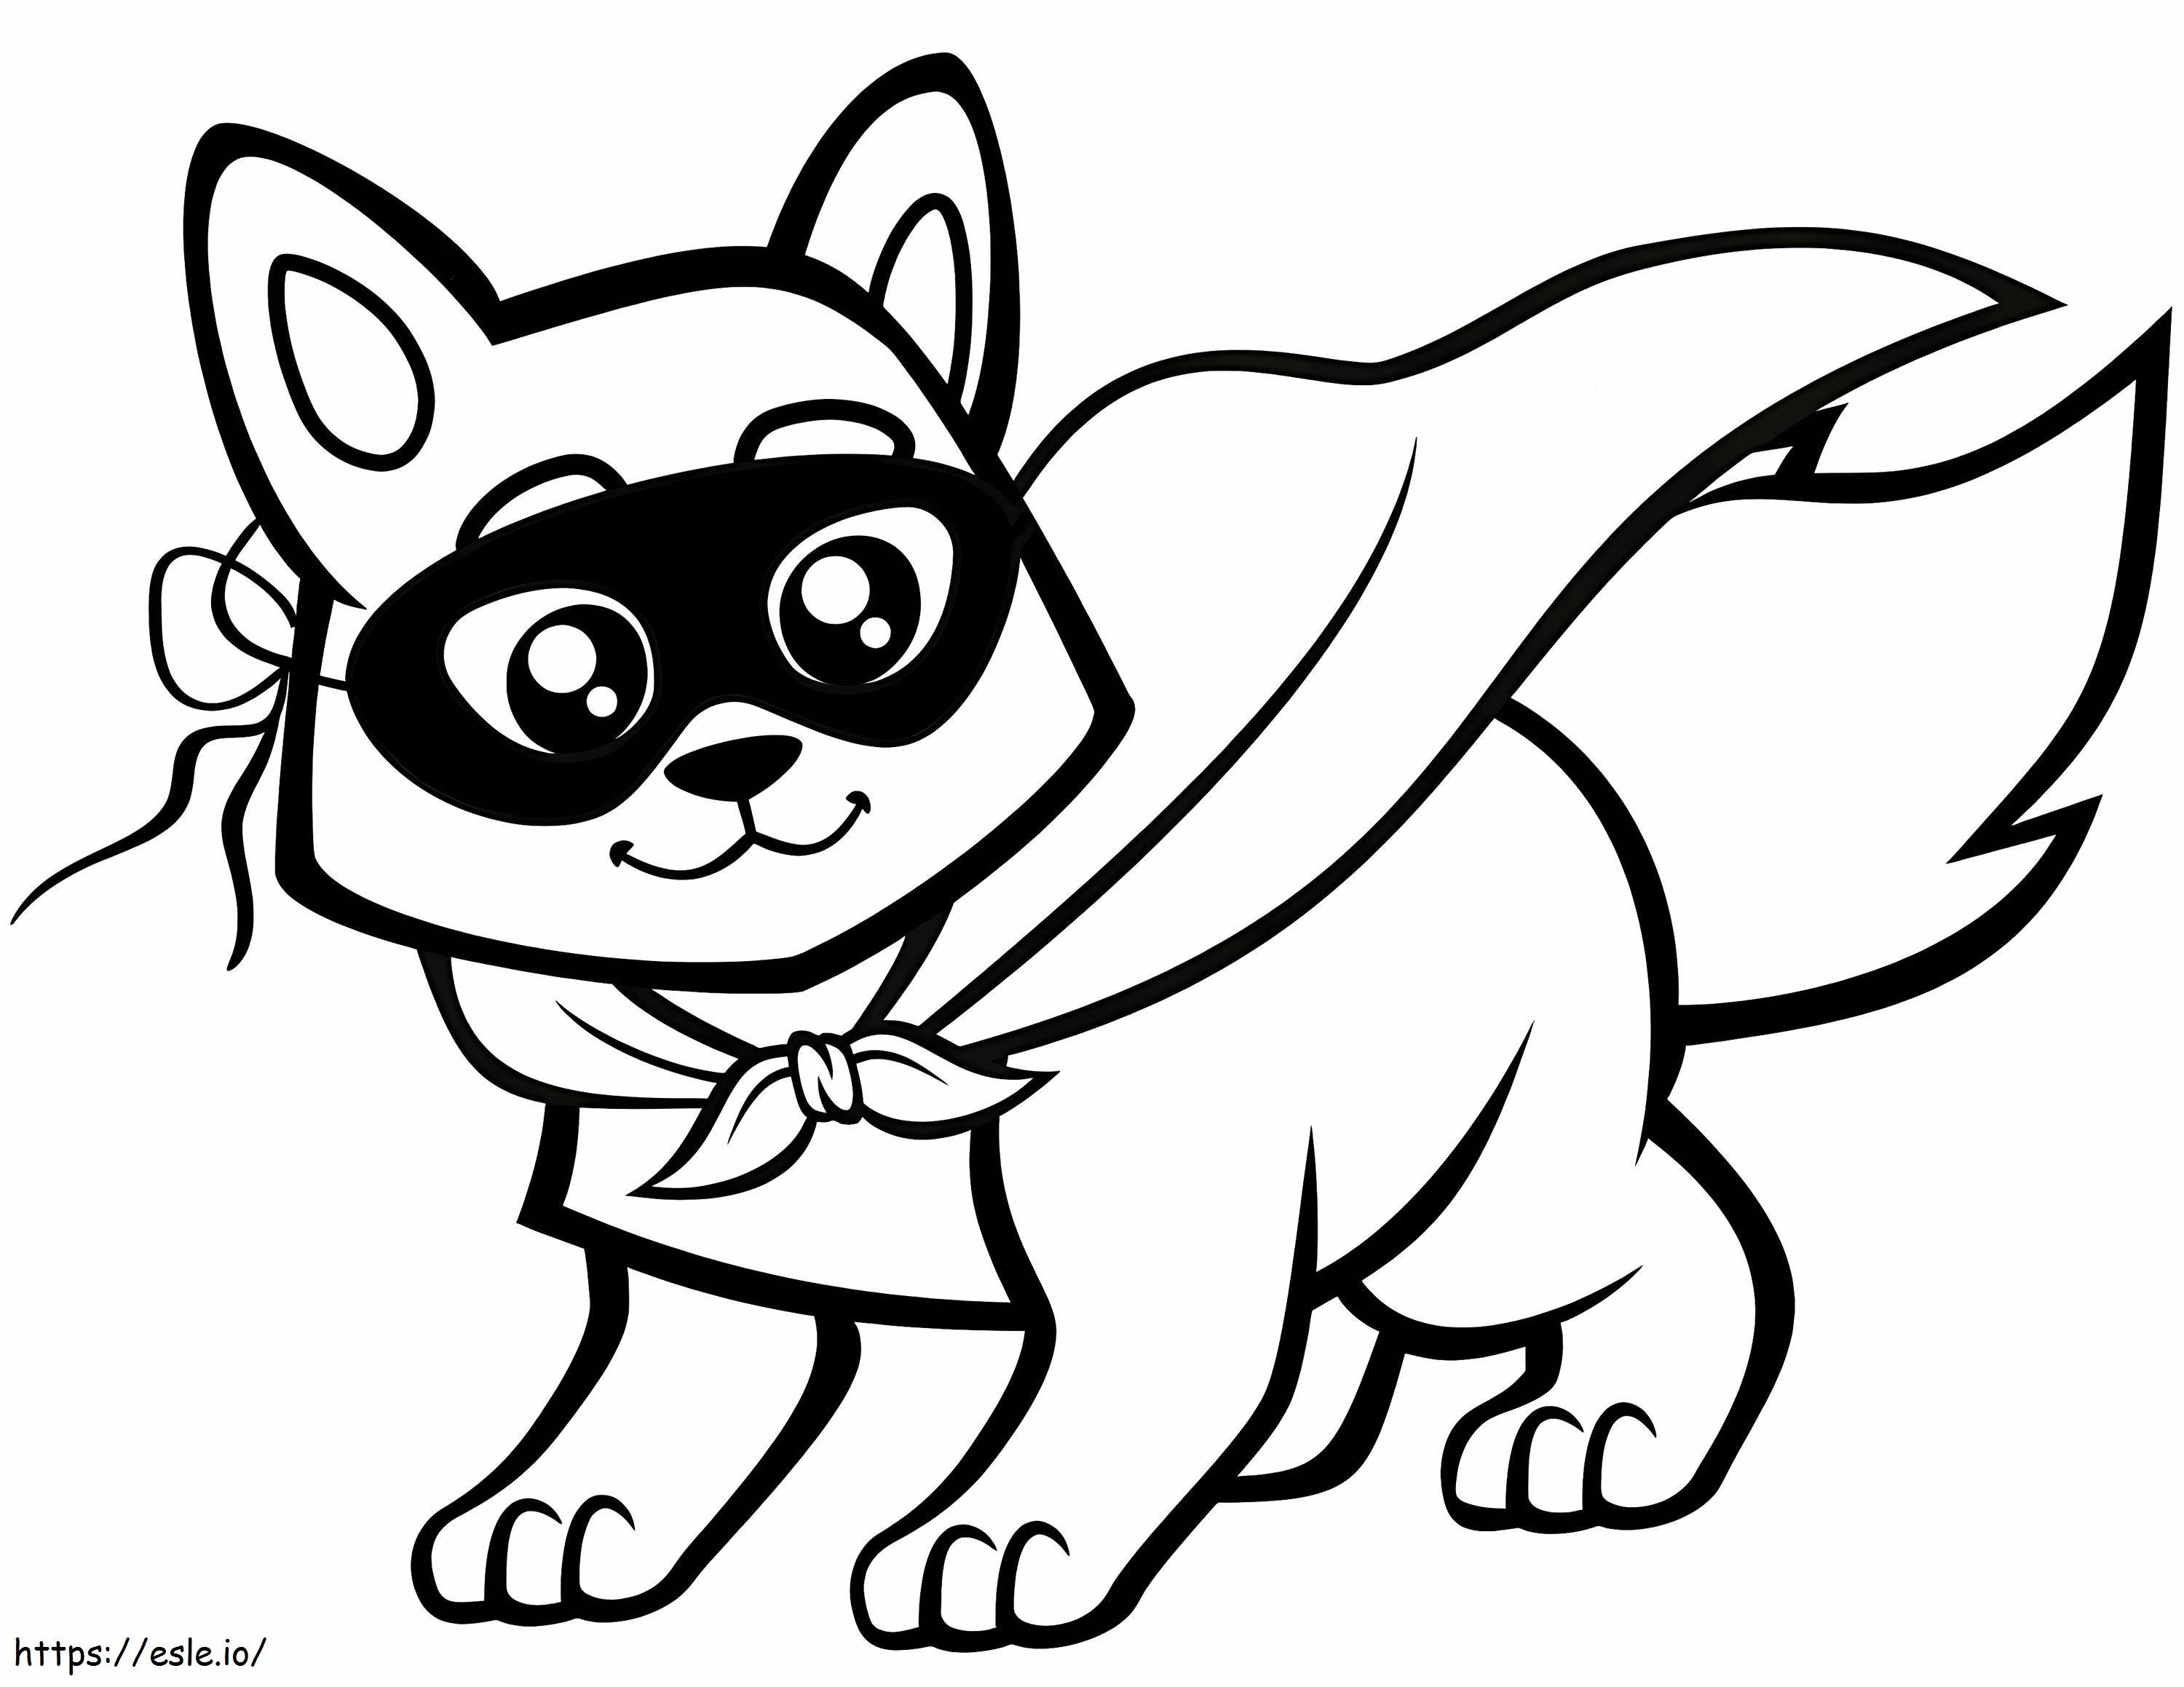 Super Cute Fox coloring page